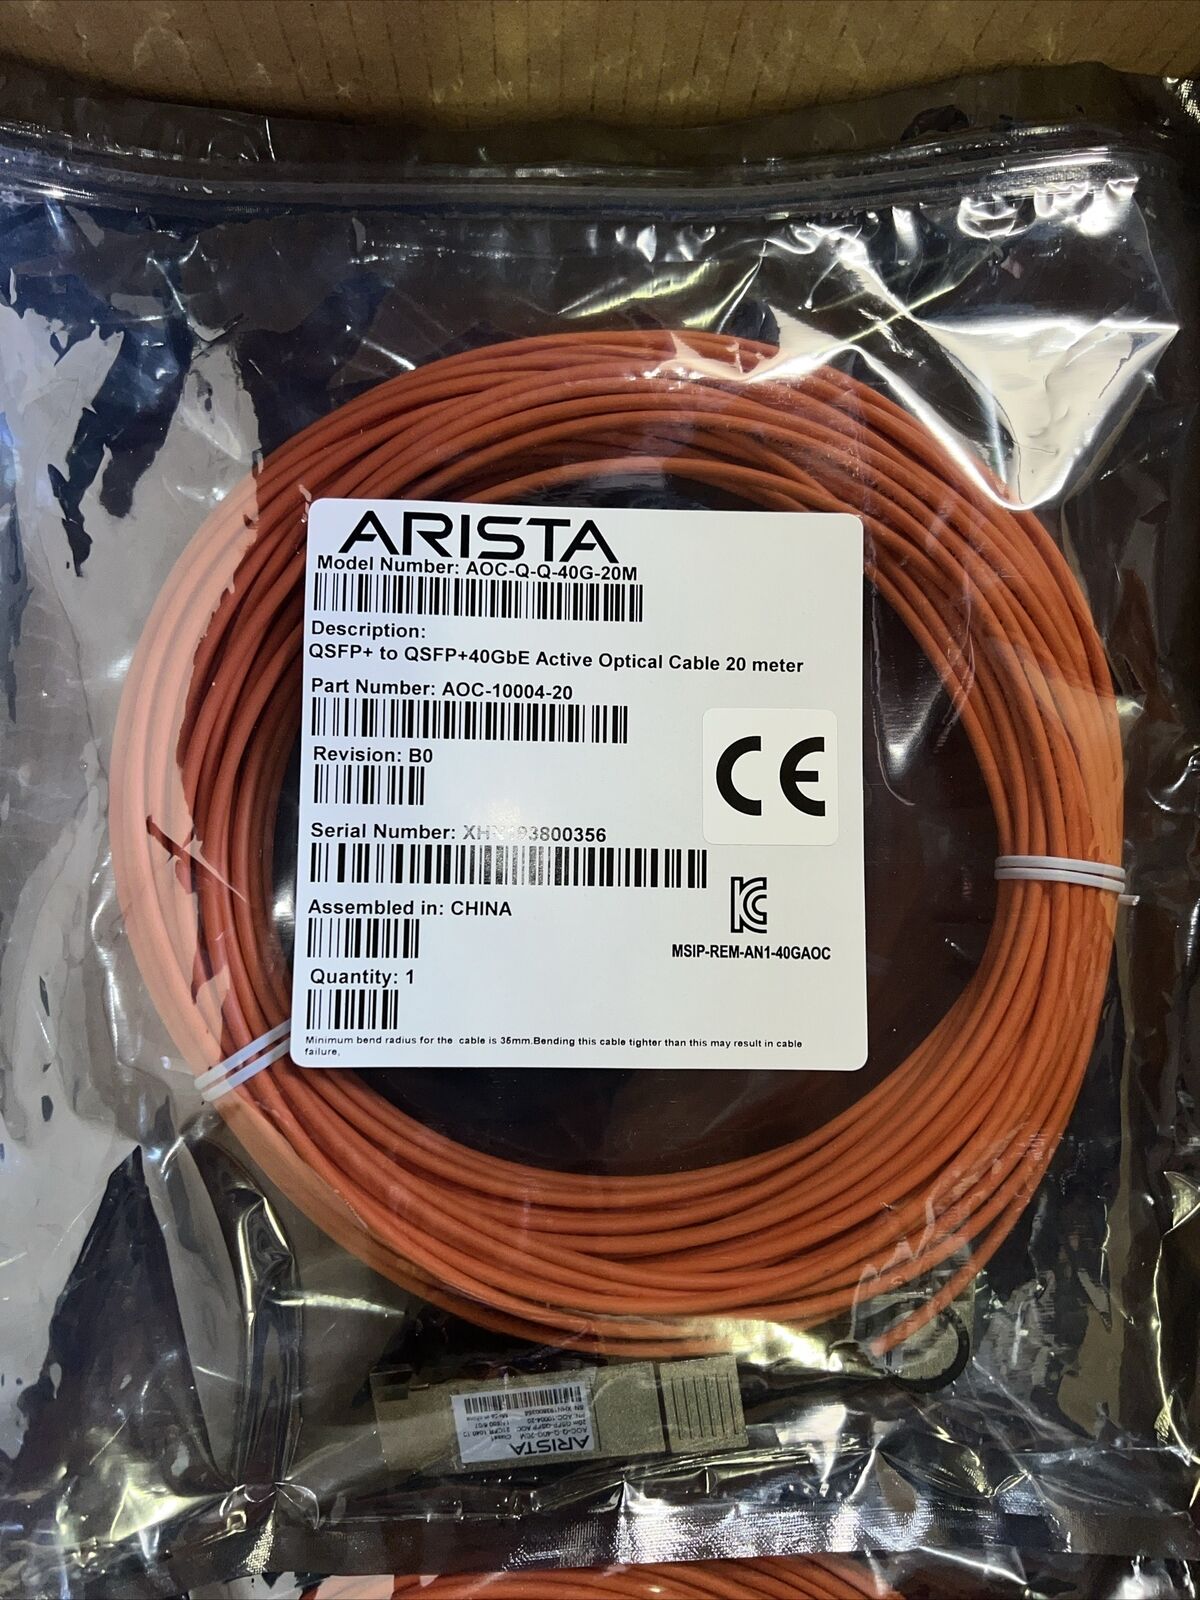 BRAND NEW- Arista AOC-Q-Q-40G-20M 40G QSFP+ Active Optical Cable QSFP+ TO QSFP+